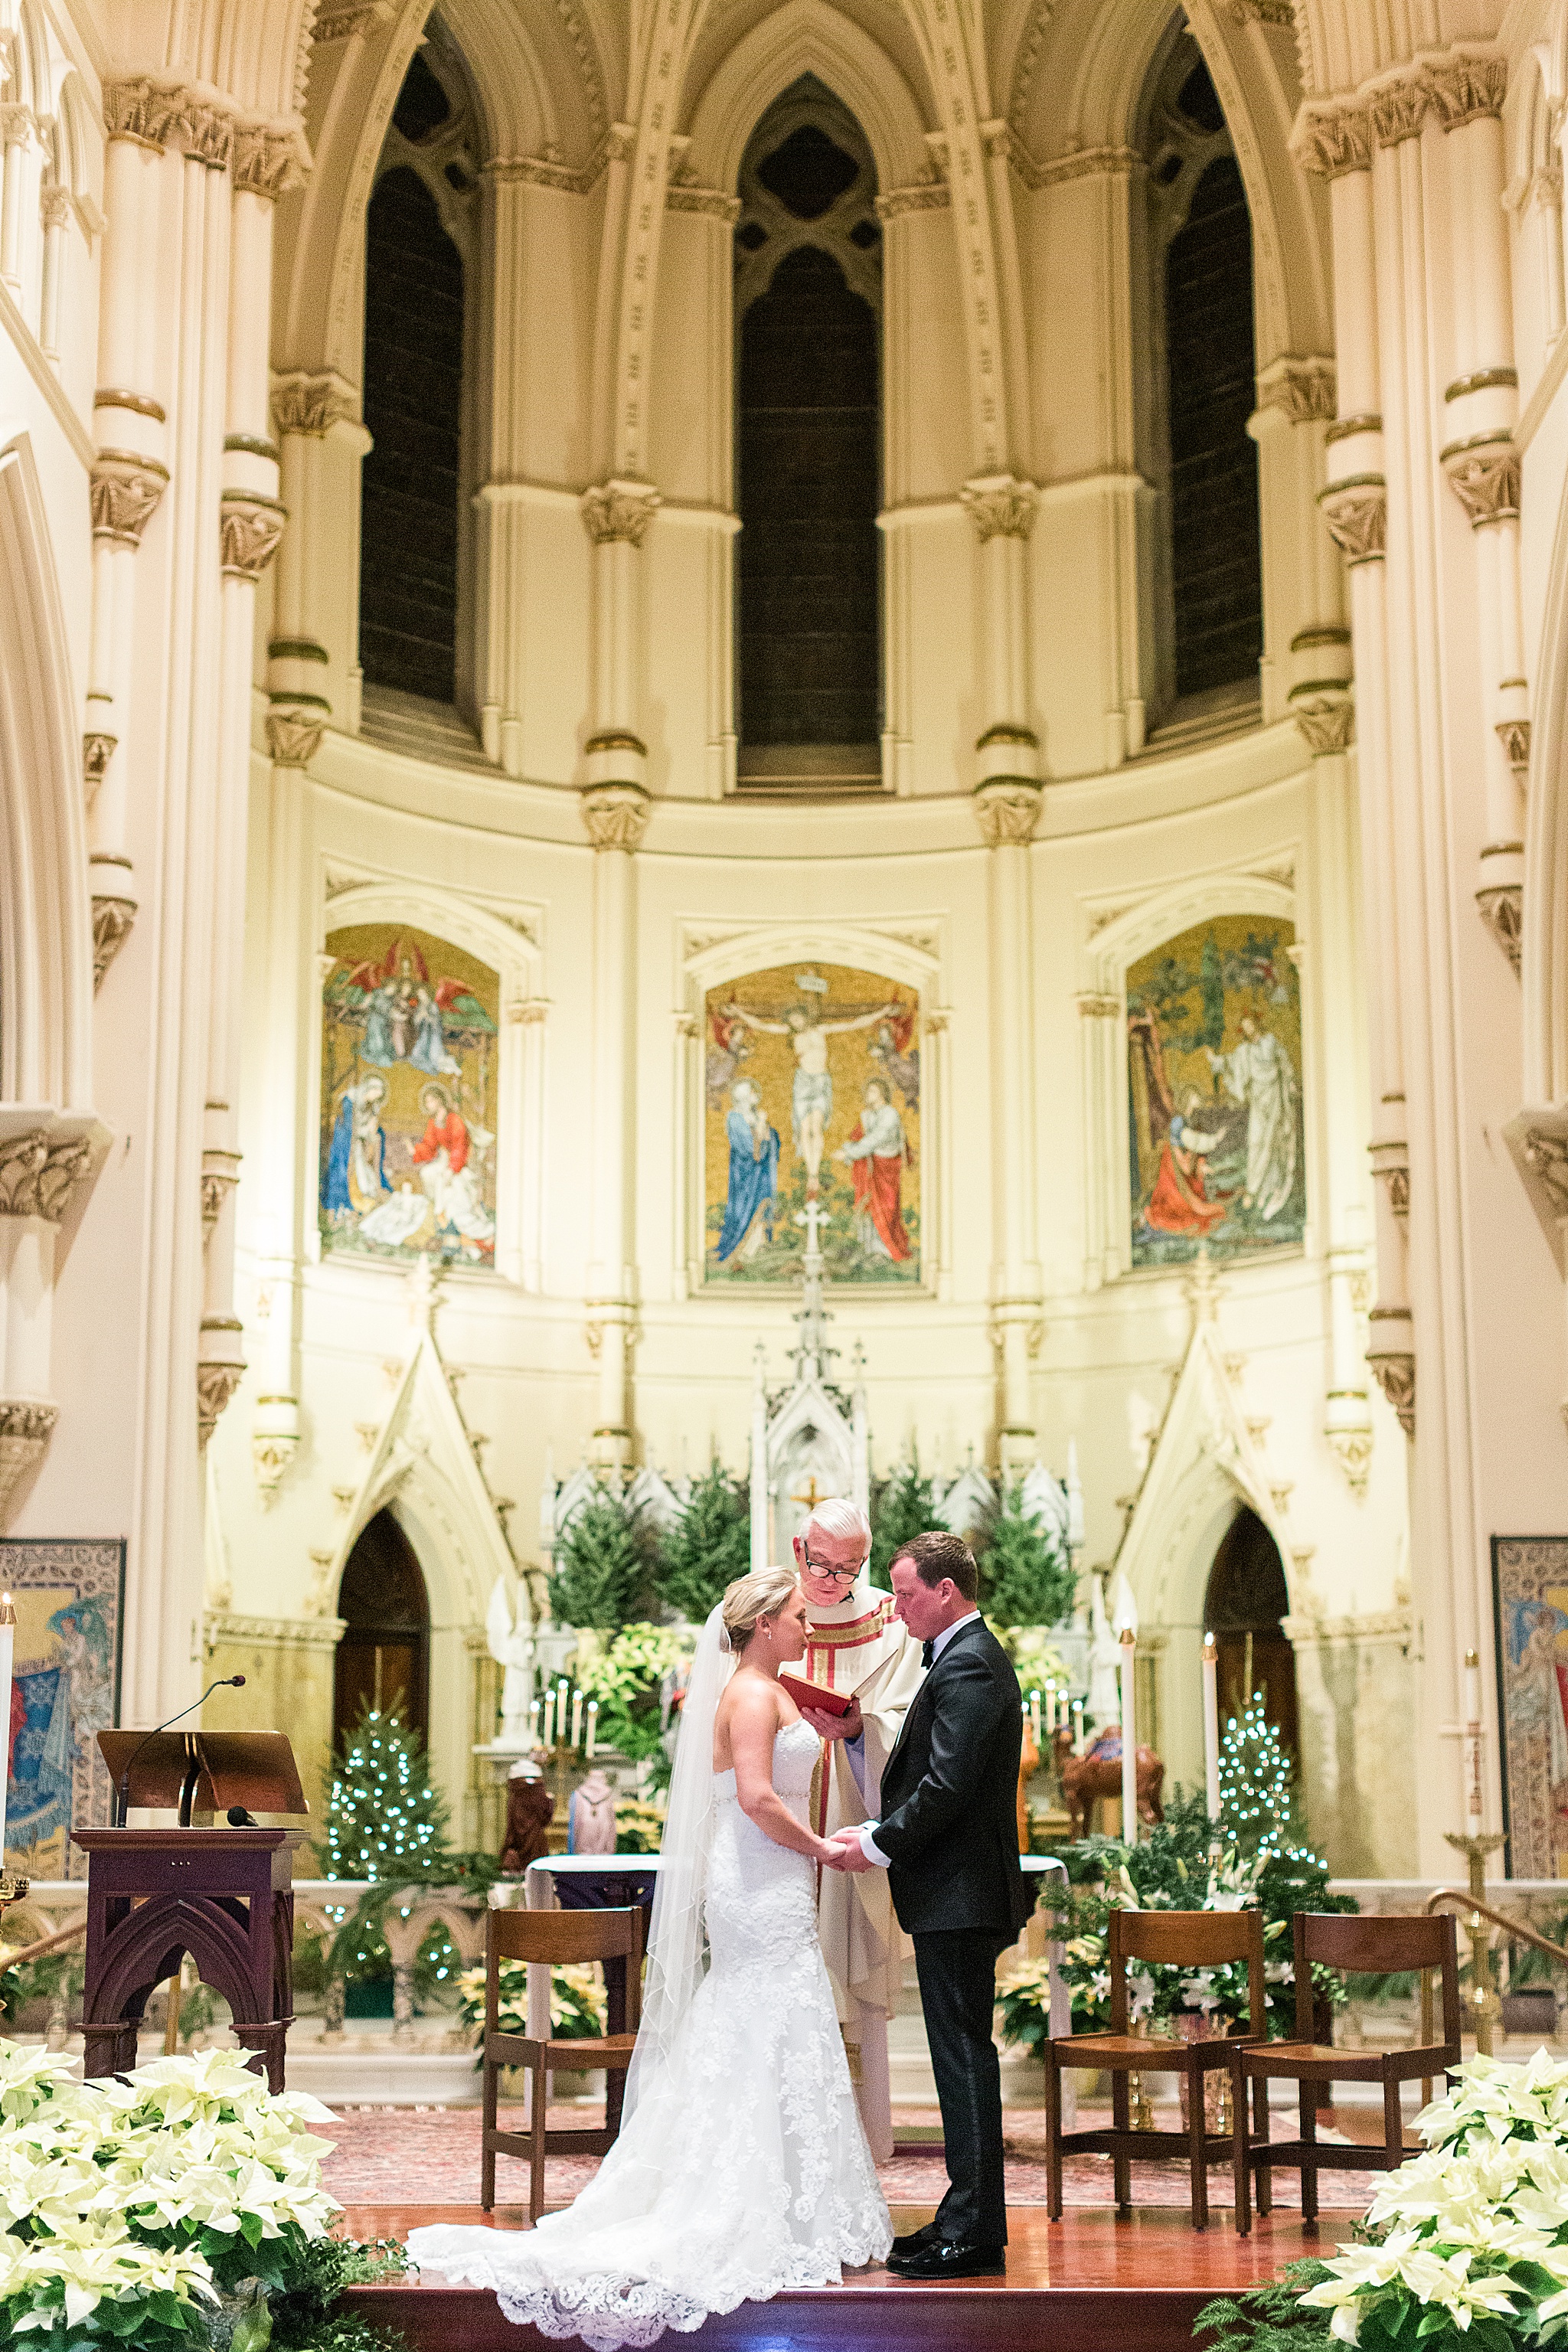 Alexandra Mandato Photography photographs classic church wedding